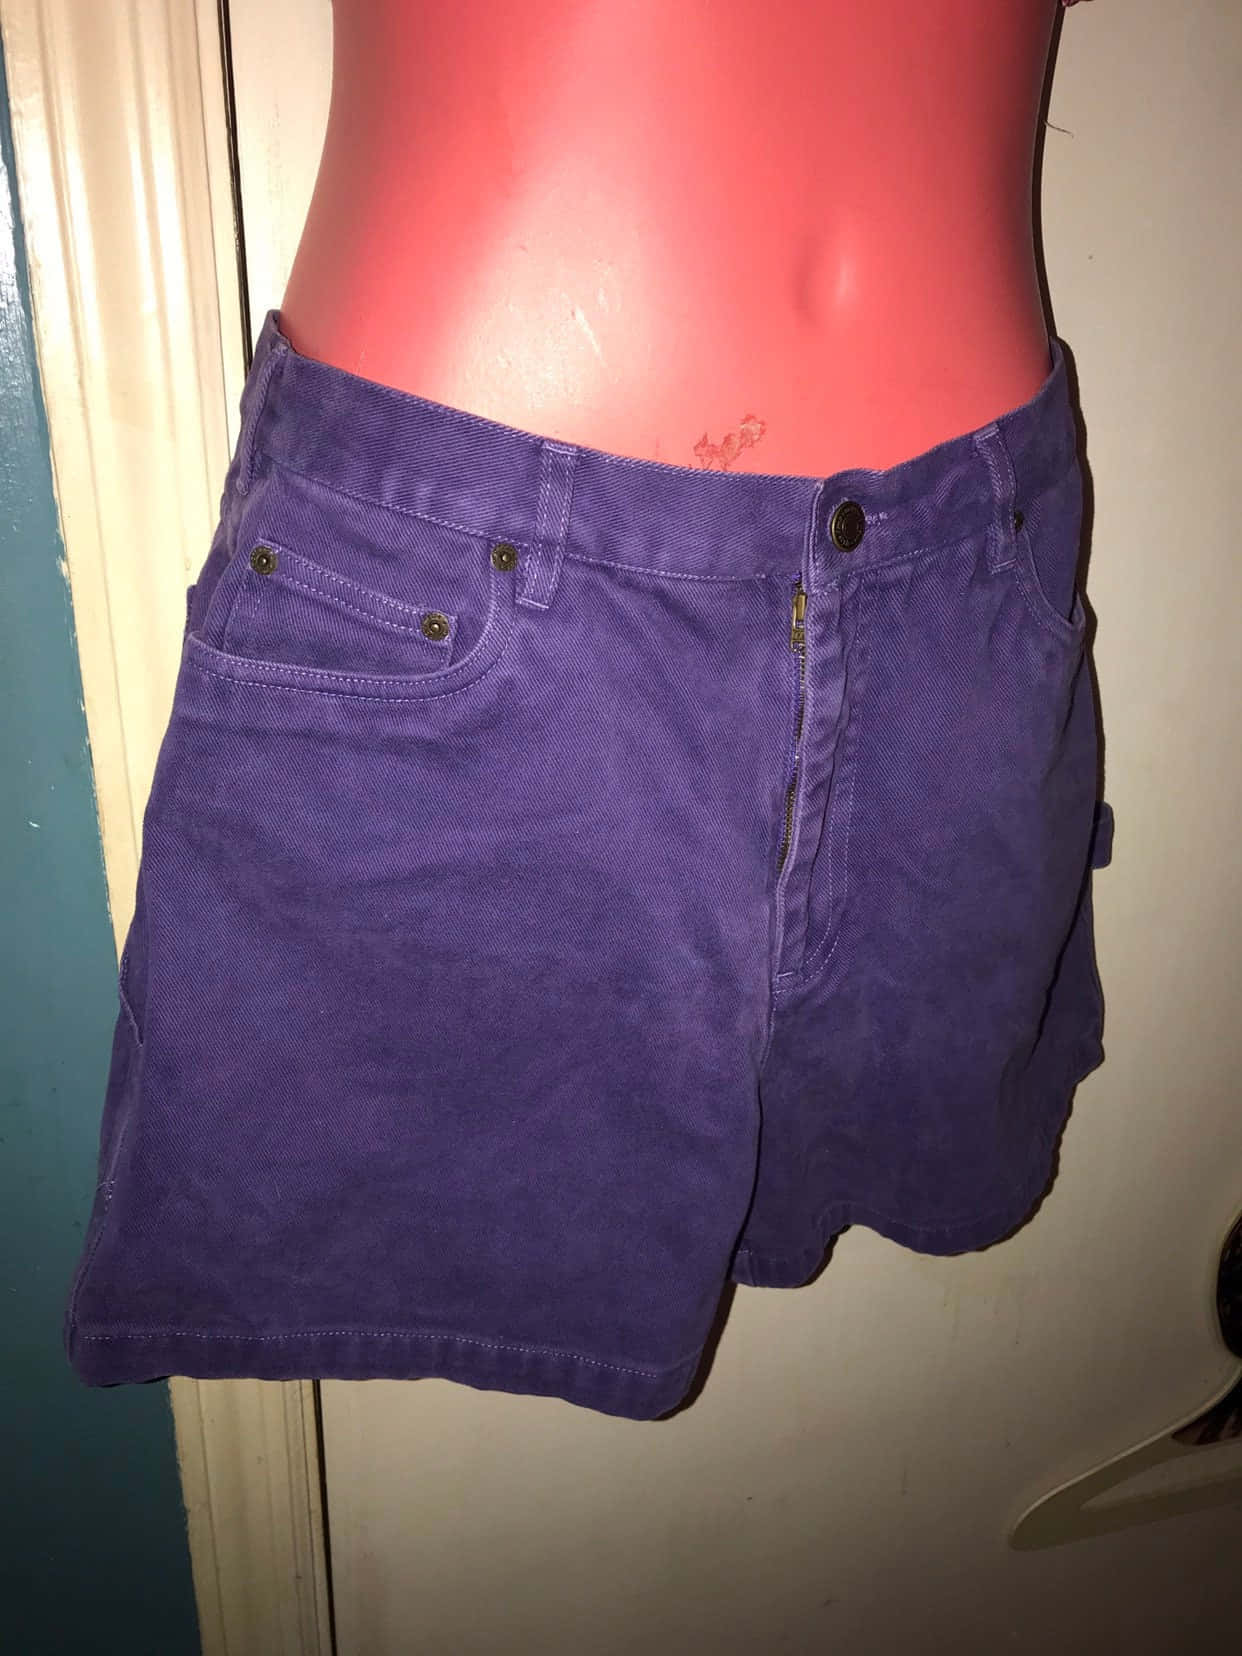 Looking stylish in Purple Shorts Wallpaper